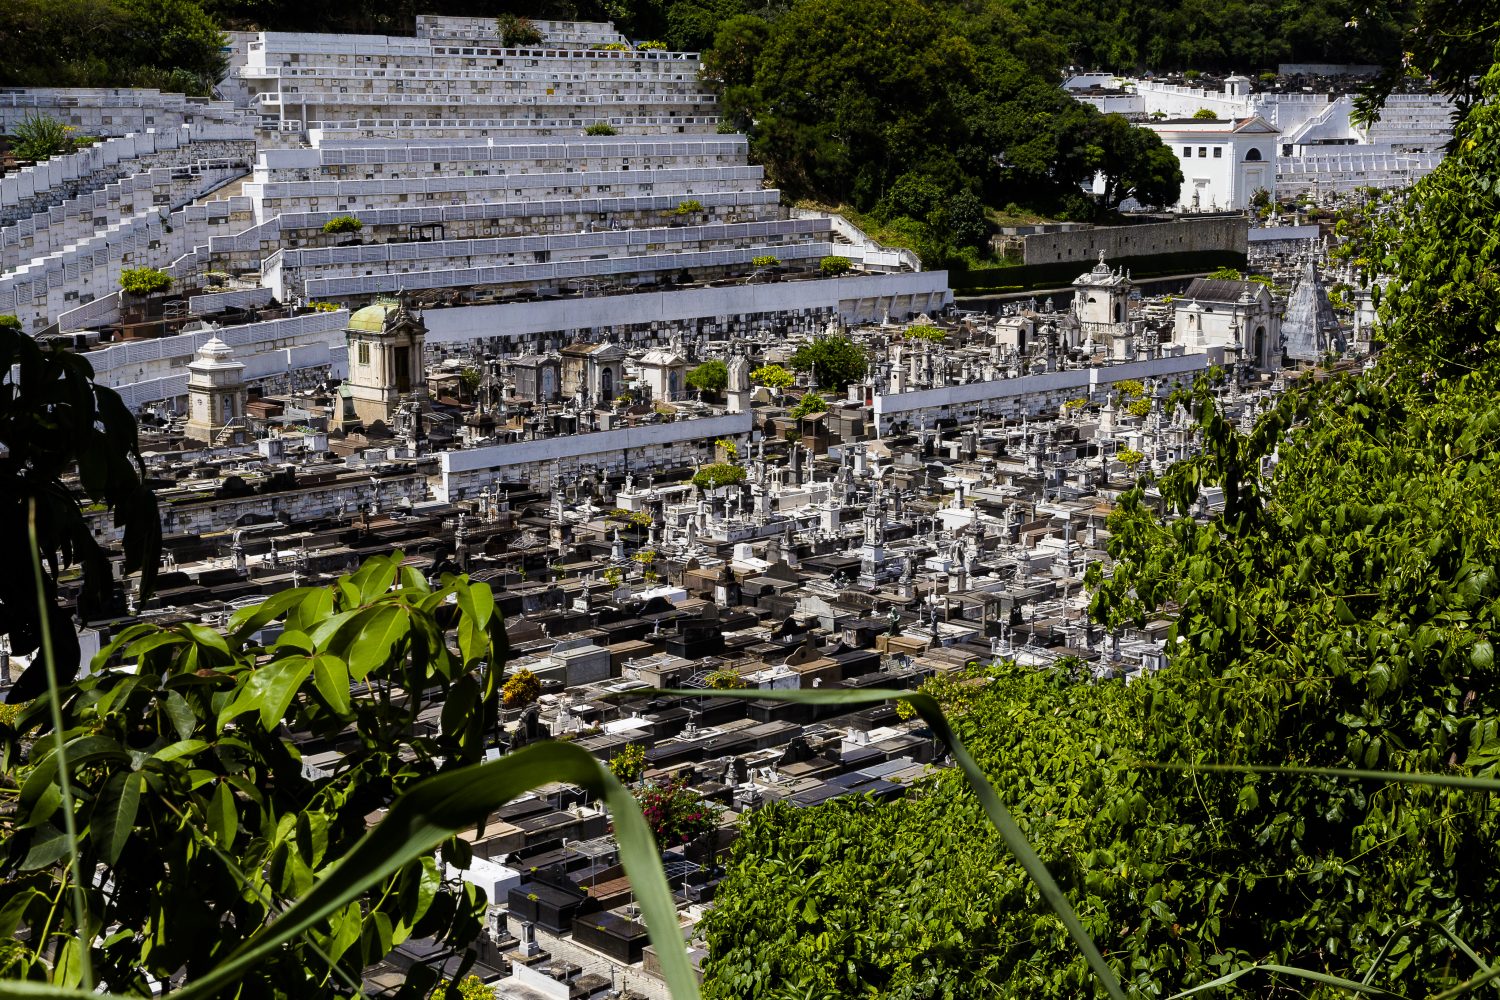 Cemitério dos Ajinhos. Foto de Márcio Menasce